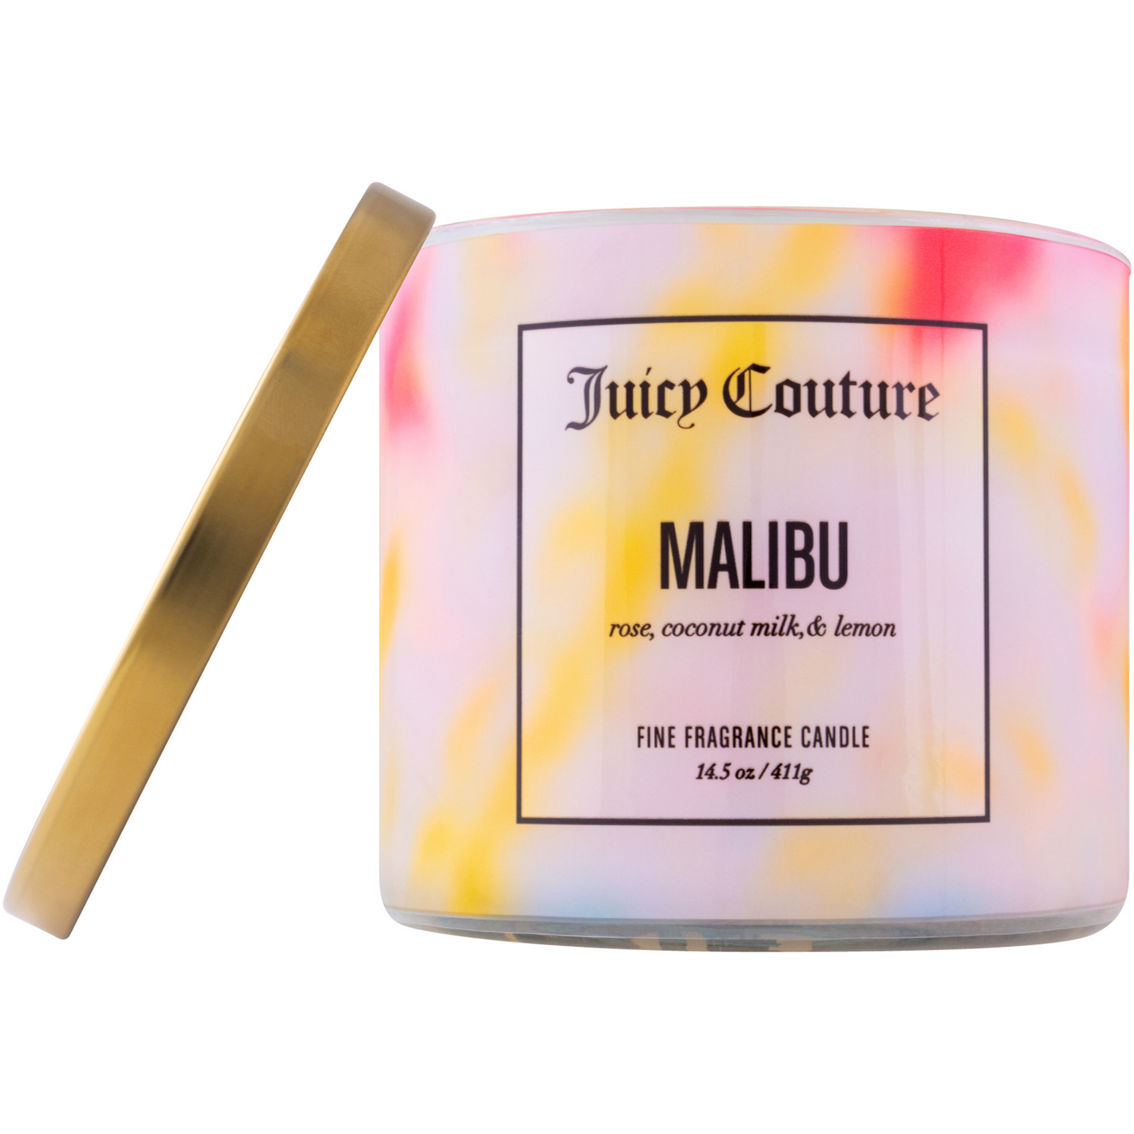 Juicy Couture Malibu Candle - Image 2 of 4